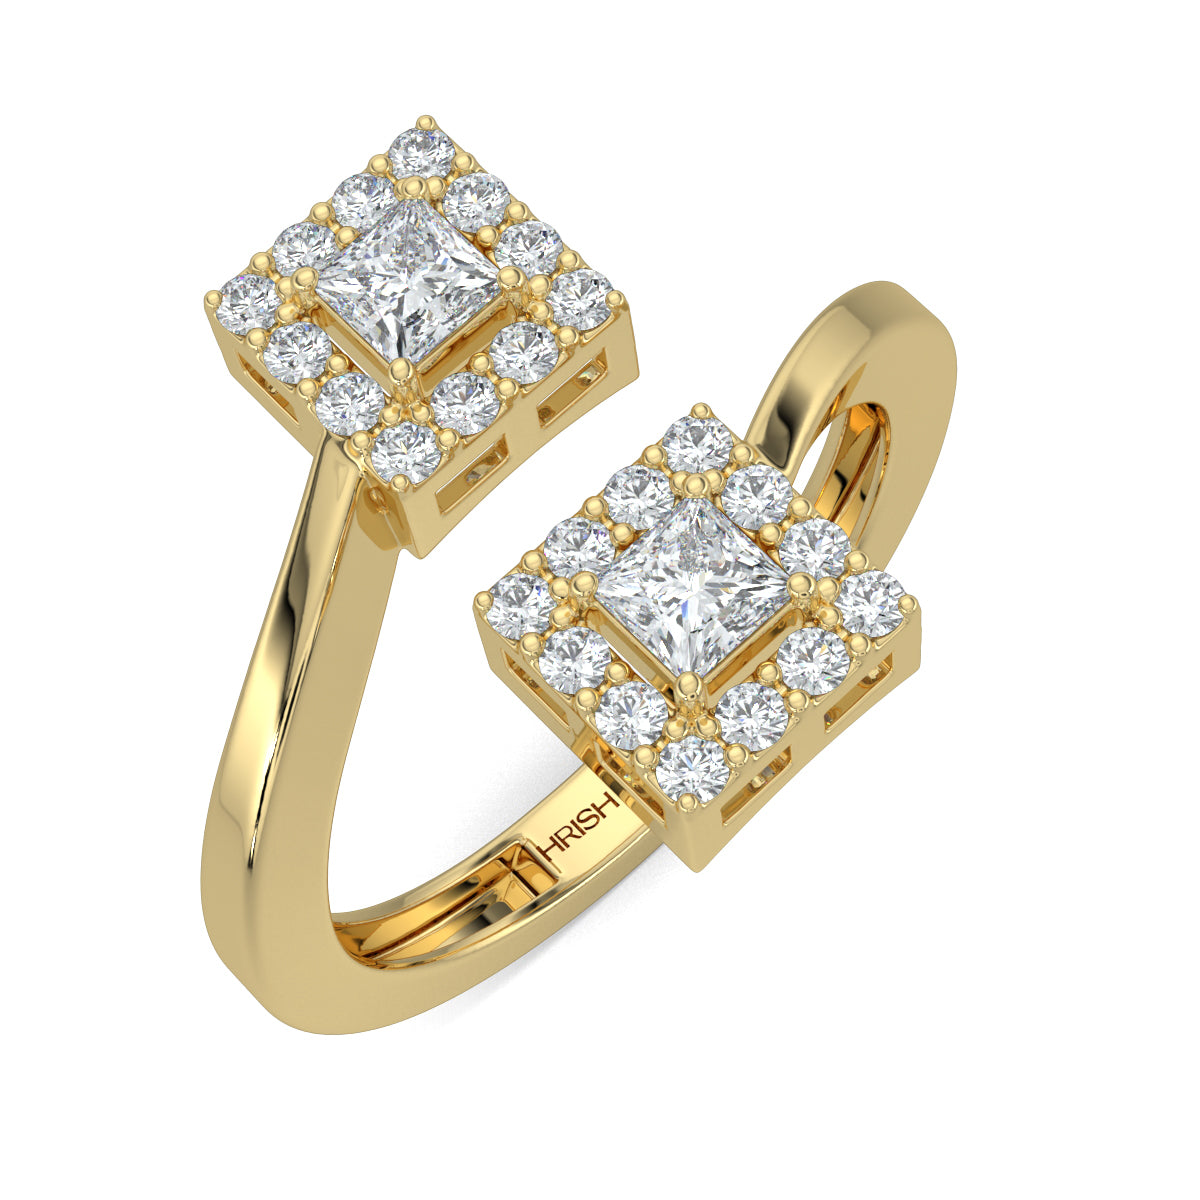 Yelllow Gold, Diamond Ring, Princess edge diamond ring, natural diamonds, lab-grown diamonds, everyday ring, pave setting, princess diamond, halo setting, bypass band ring, elegant jewelry.